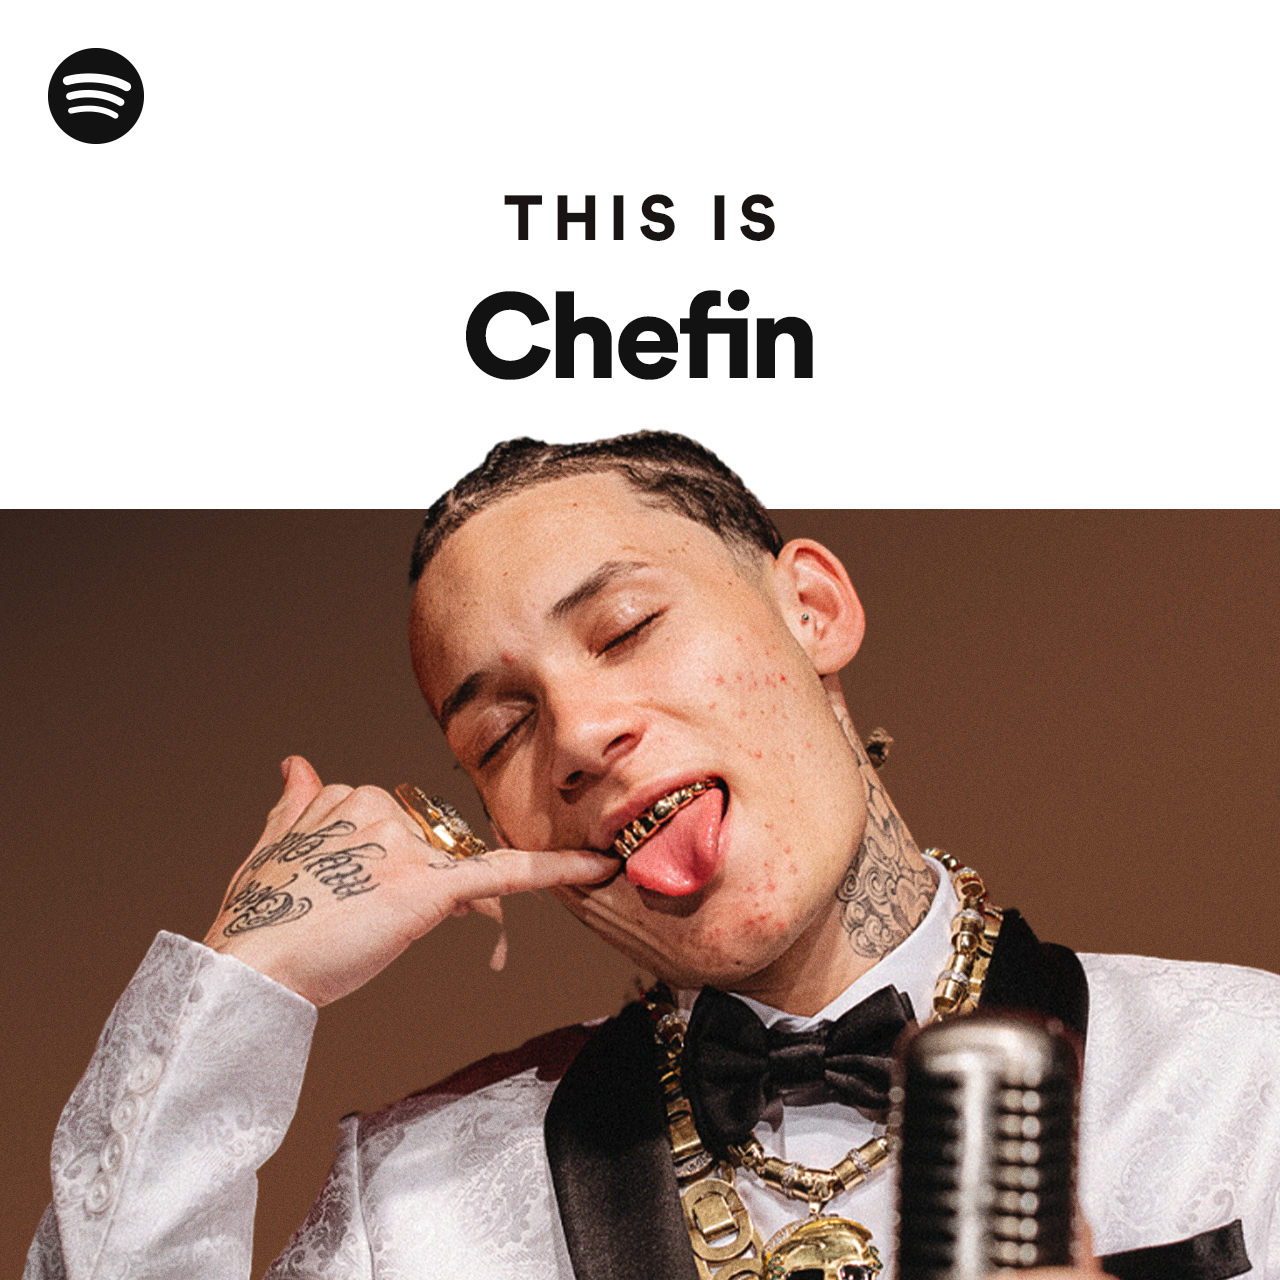 Chefin - 10 carros (Mainstreet) - playlist by Spotify